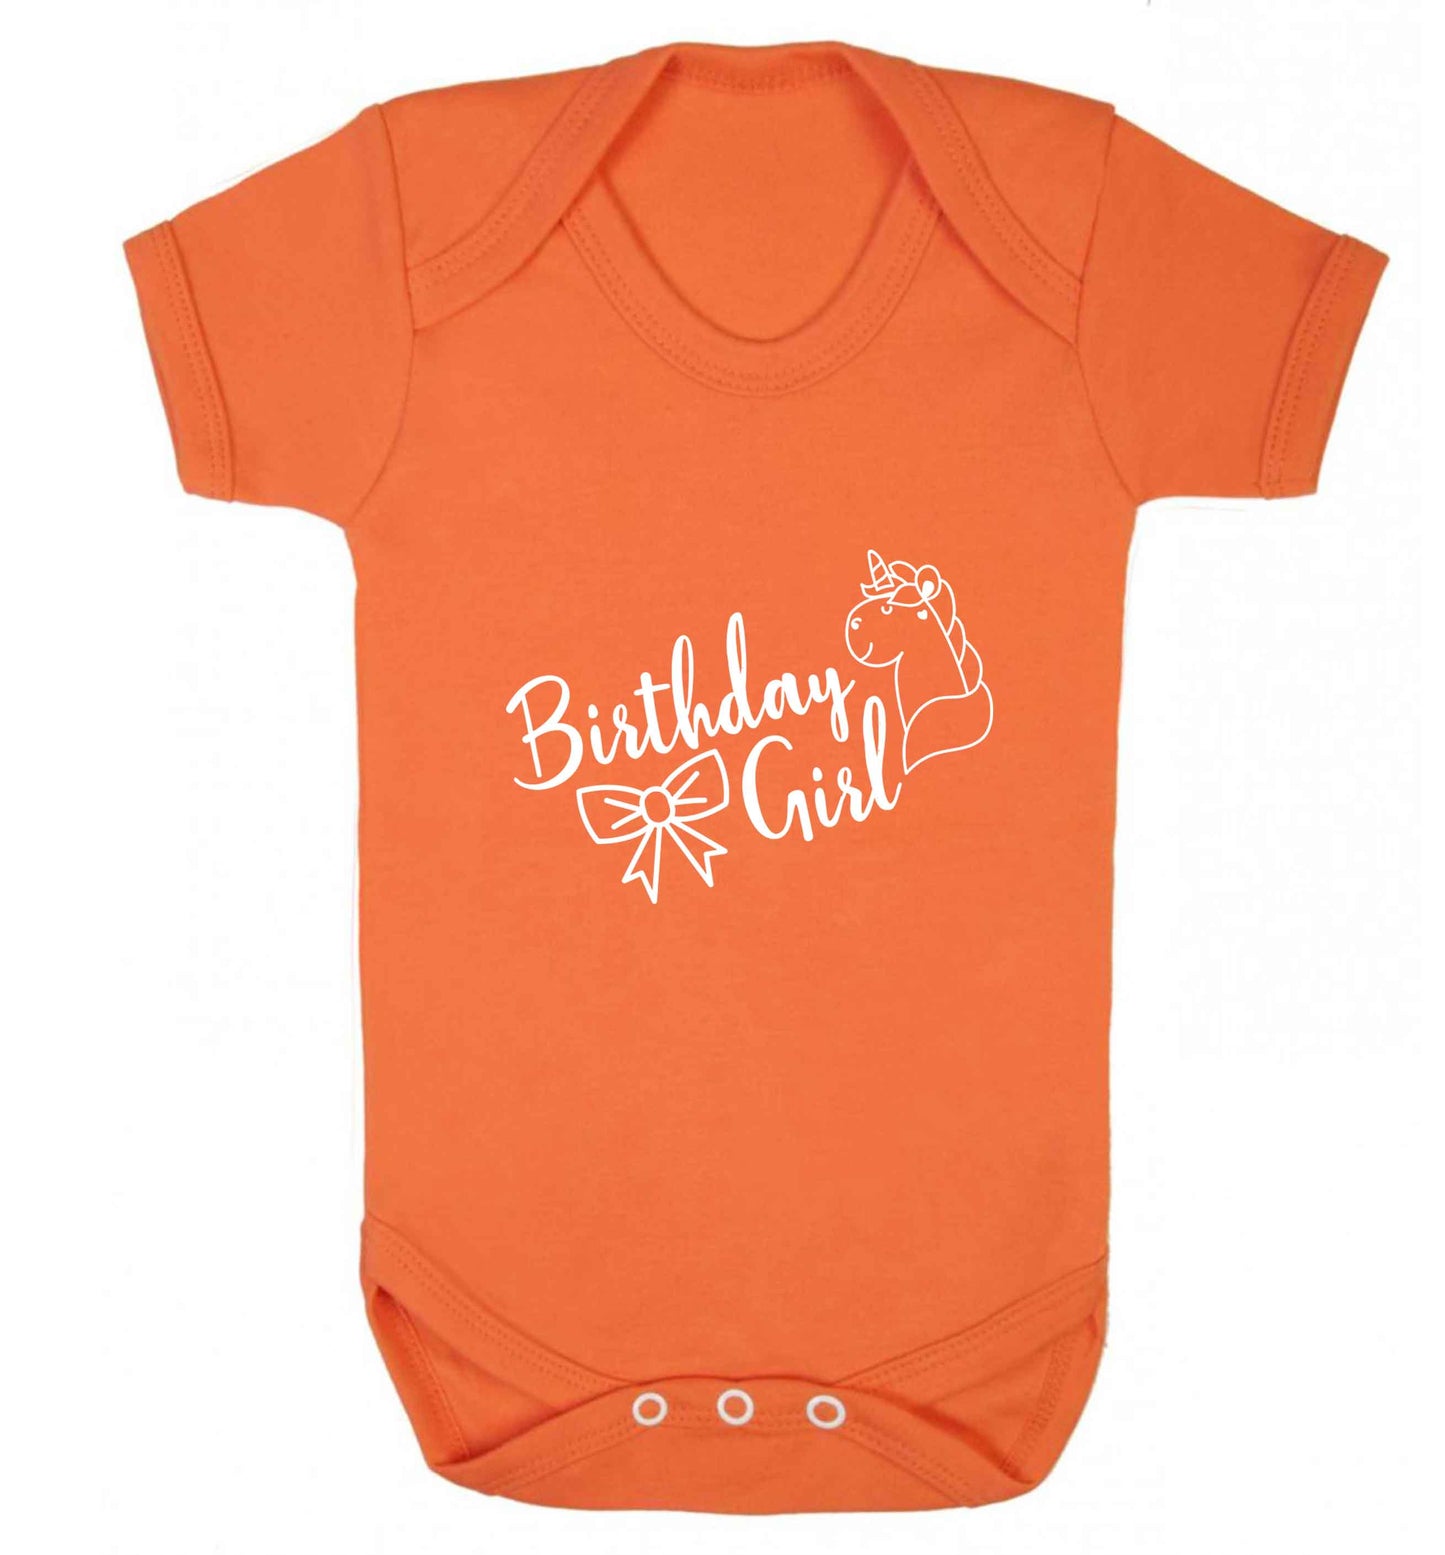 Birthday girl baby vest orange 18-24 months